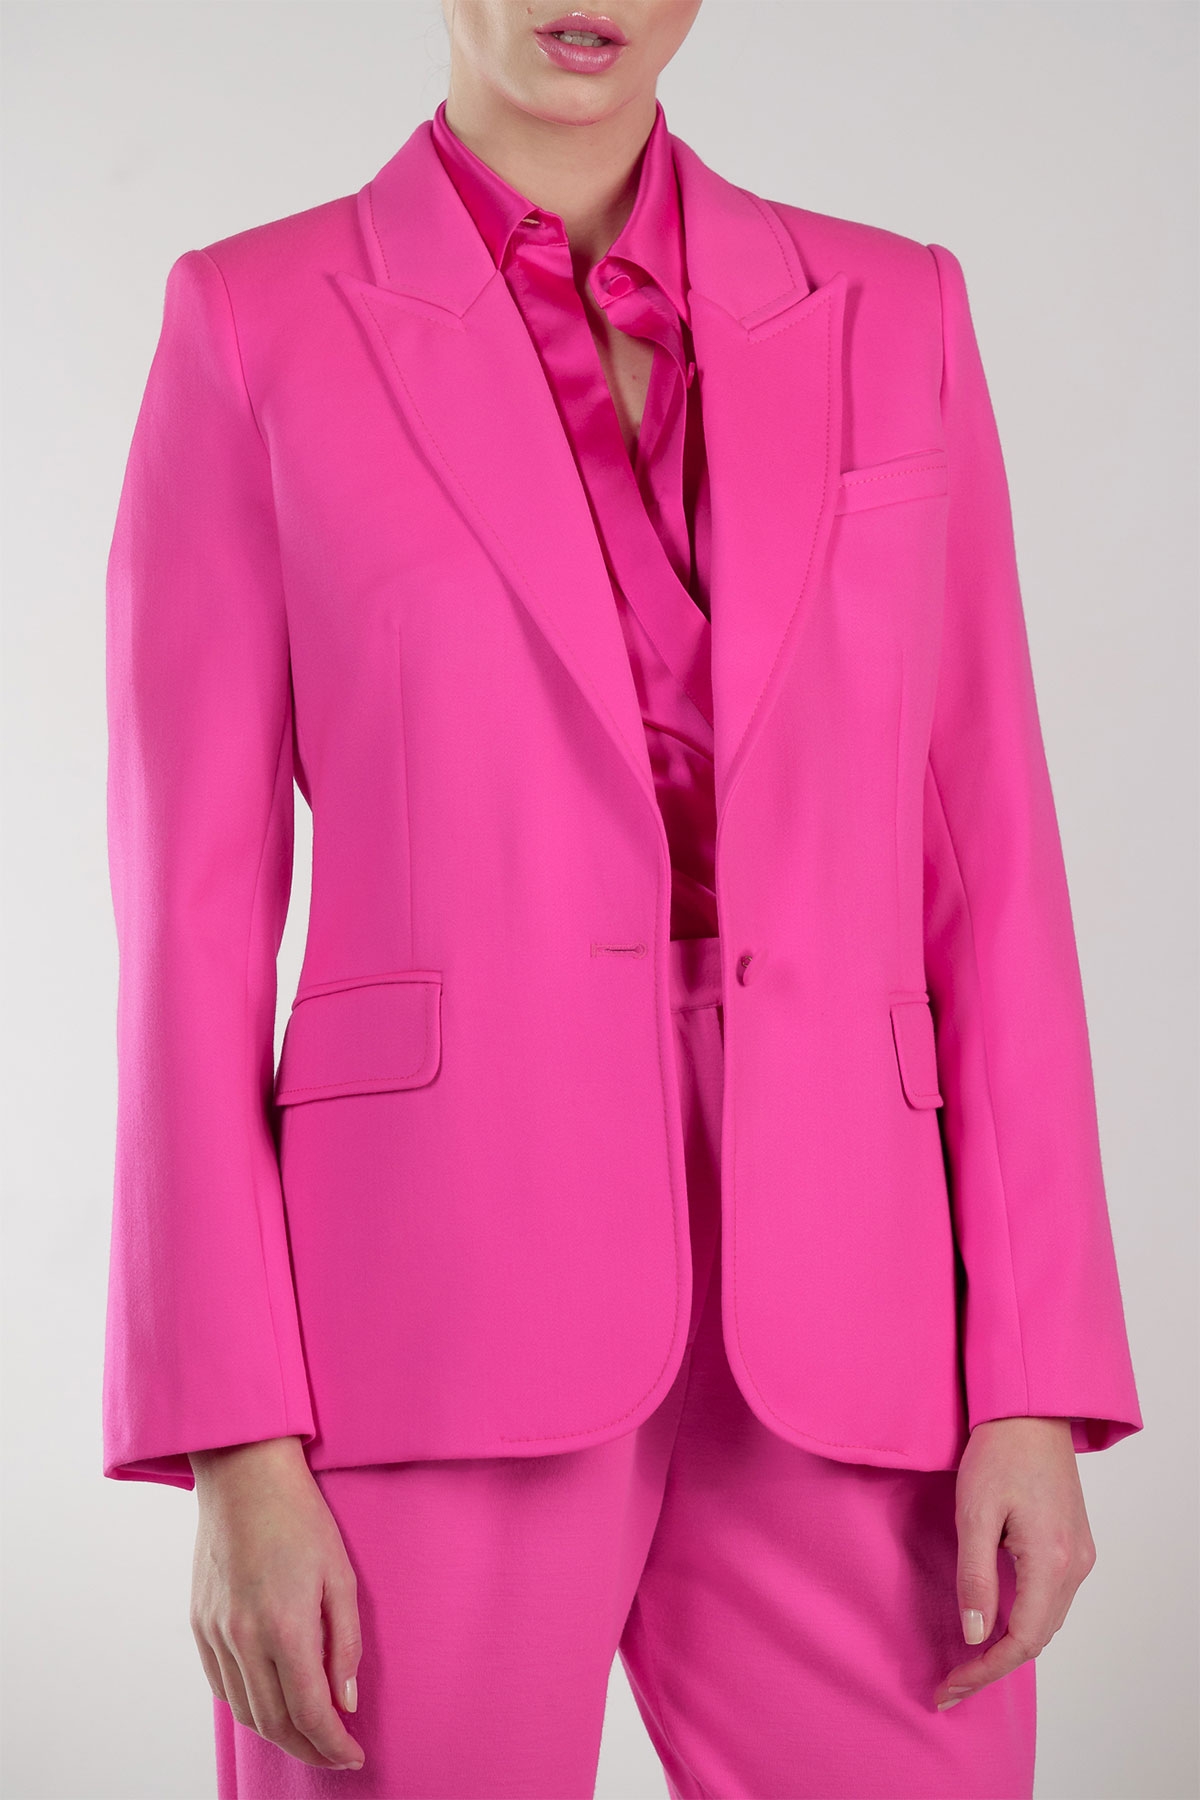 Hot Pink Premium Wool Blazer With Peak Lapels Styland